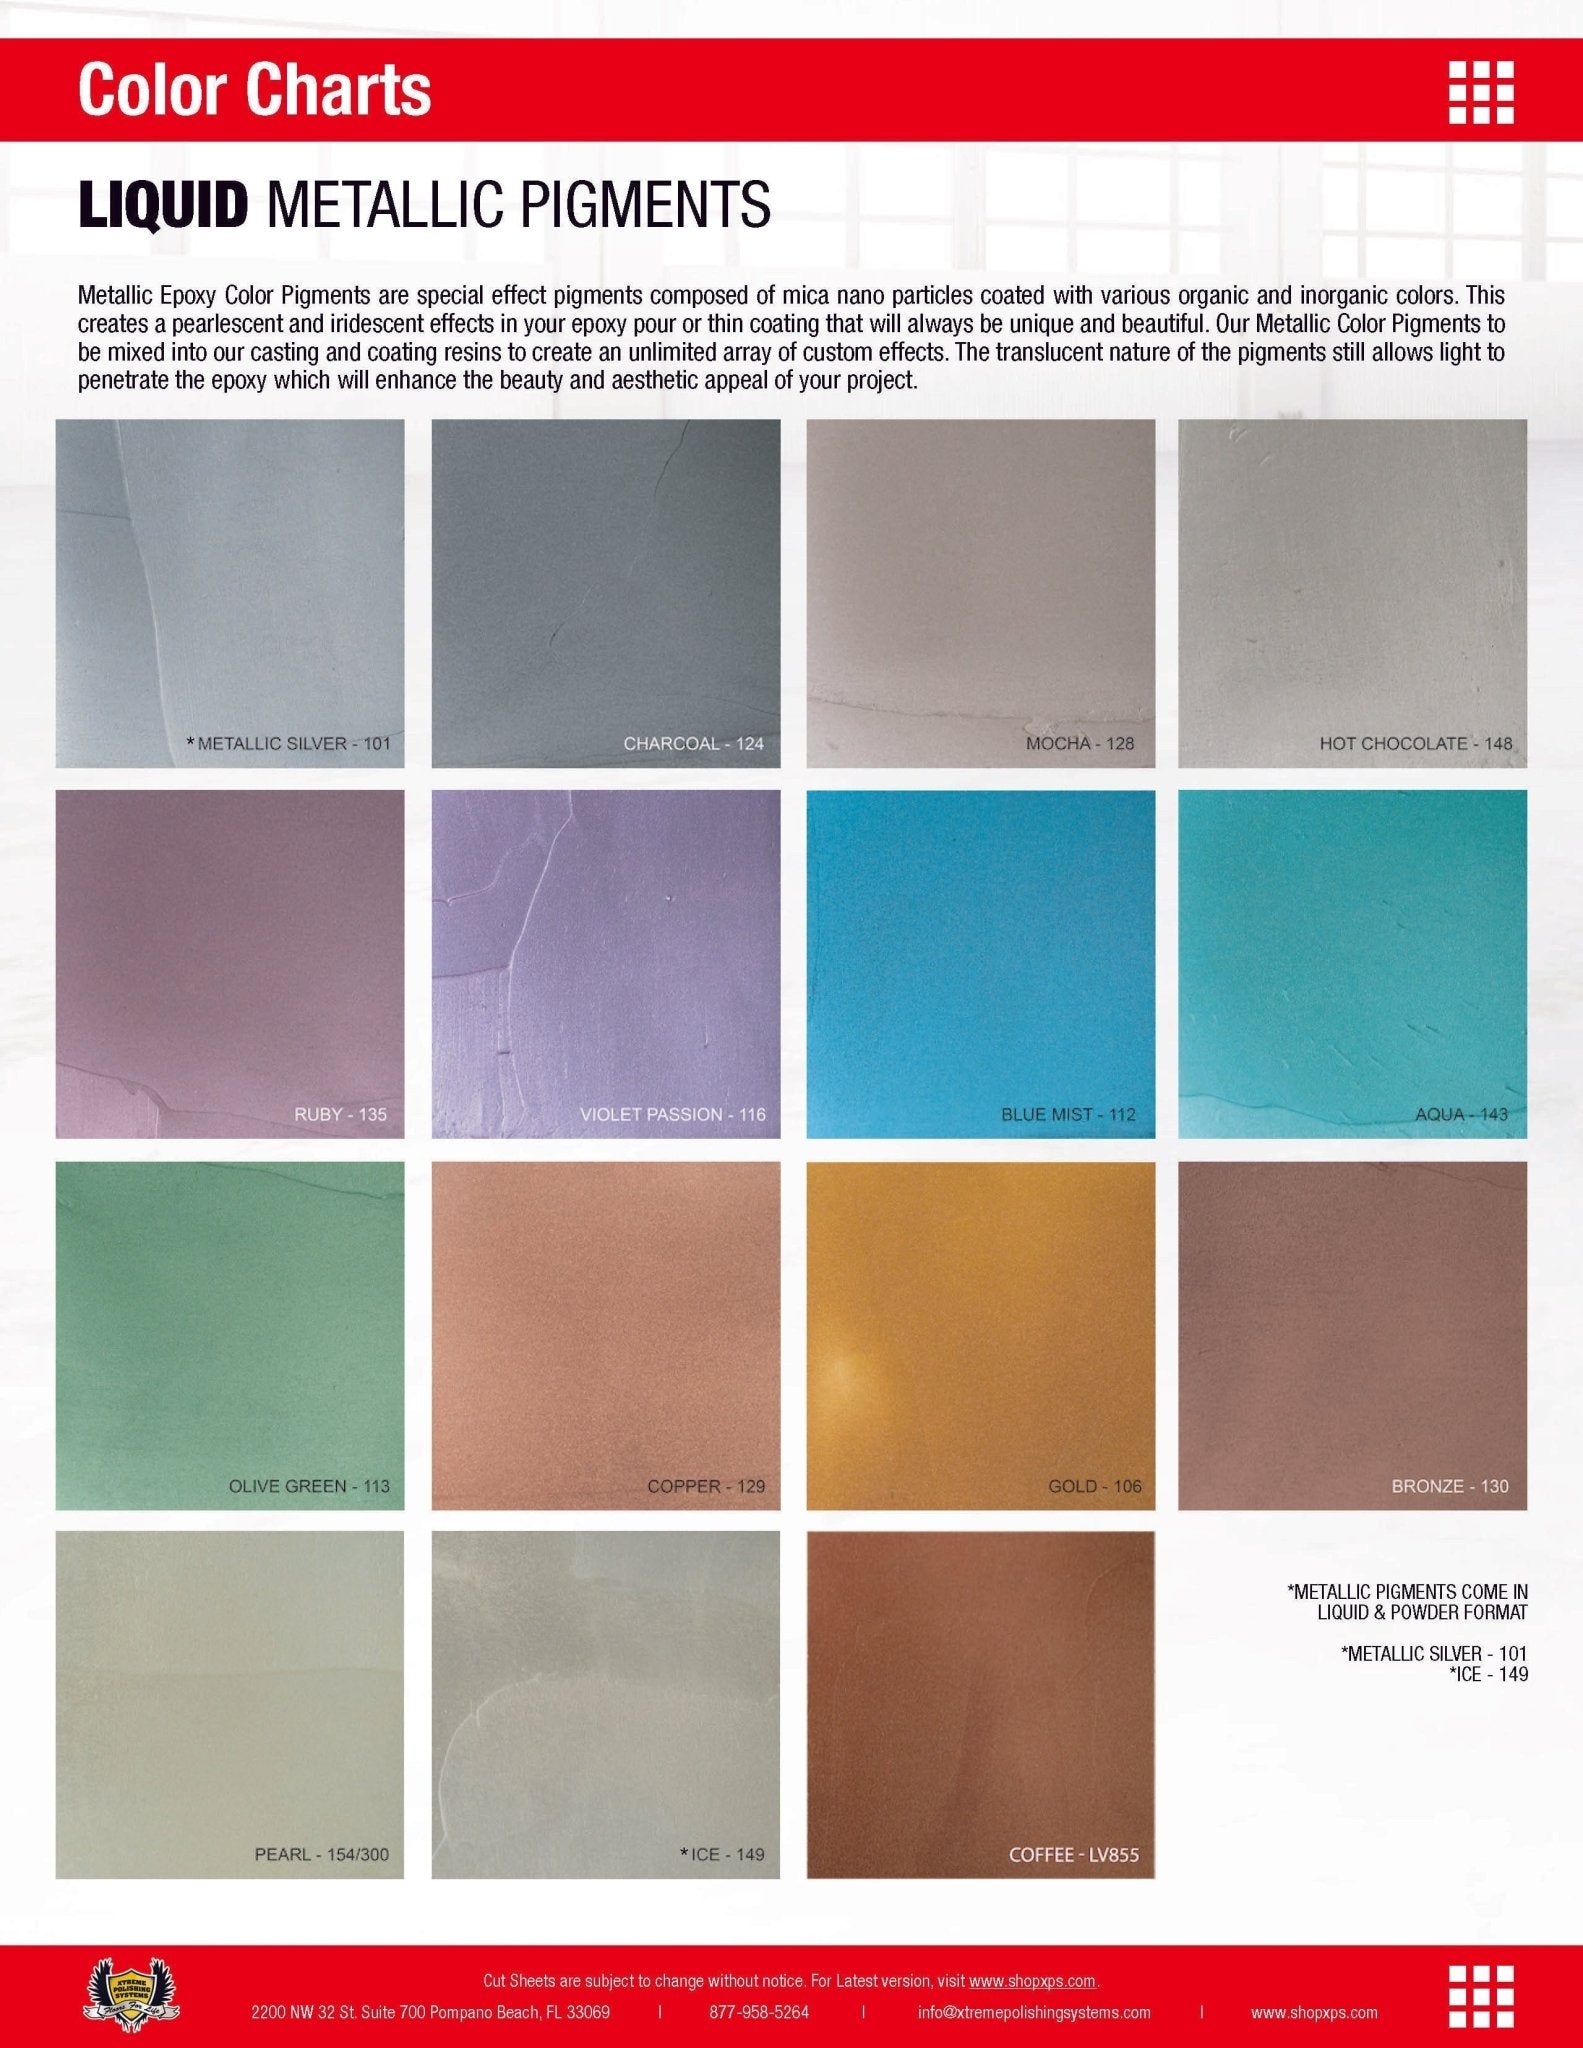 Epoxy Resin Color Pigment - Premium, Affordable Resin Pigment Colors